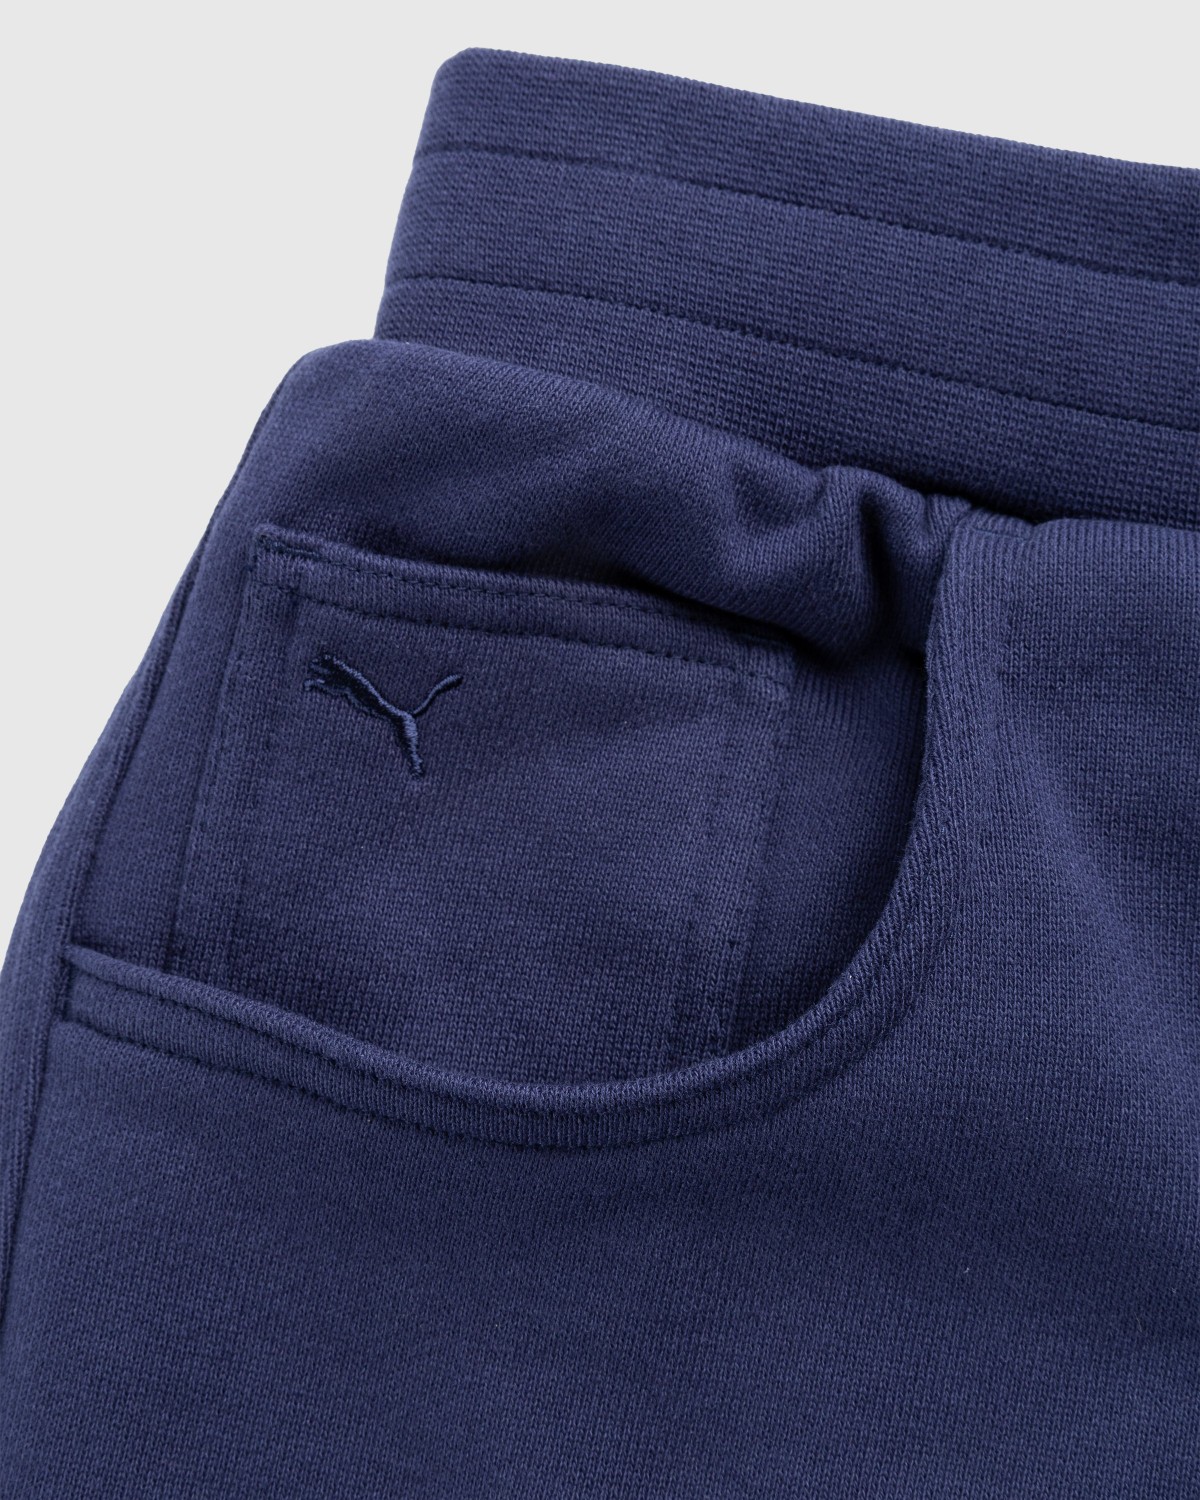 Puma x Noah – Shorts Blue | Highsnobiety Shop